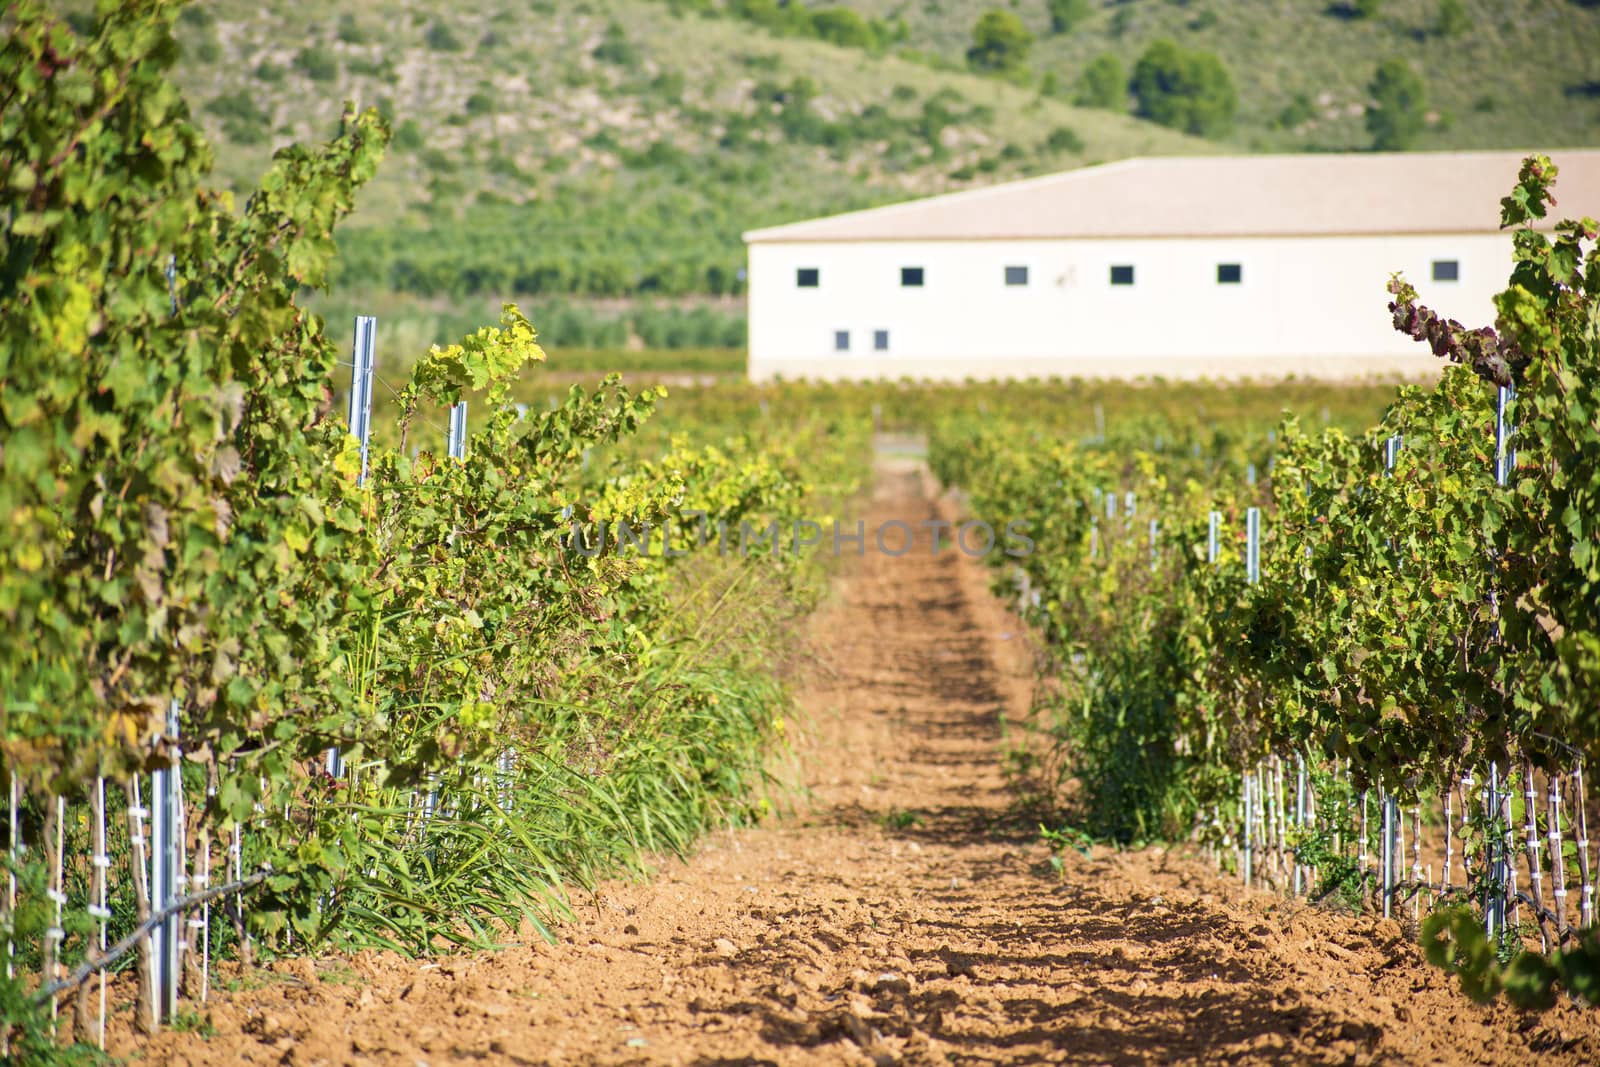 Vines plantation in Castilla la mancha, Spain, 2019. Vineyard perspective in agricultural field. Wind moving vine leaves